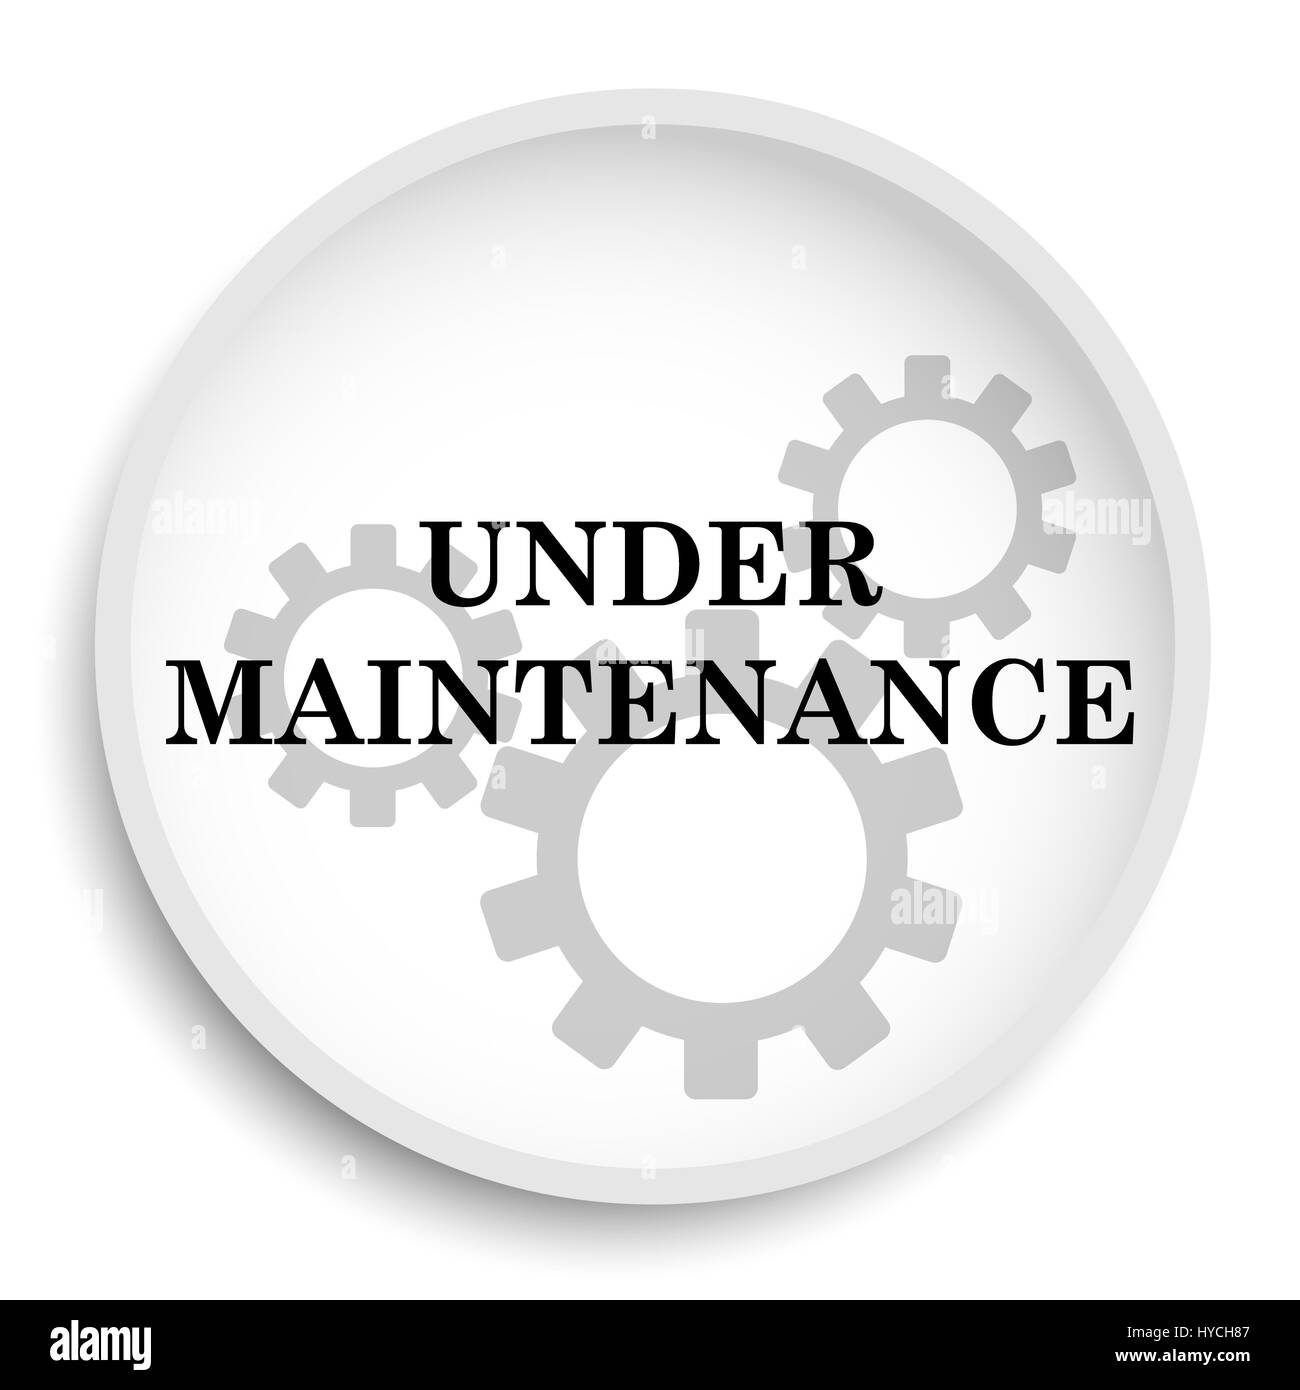 https://c8.alamy.com/comp/HYCH87/under-maintenance-icon-under-maintenance-website-button-on-white-background-HYCH87.jpg